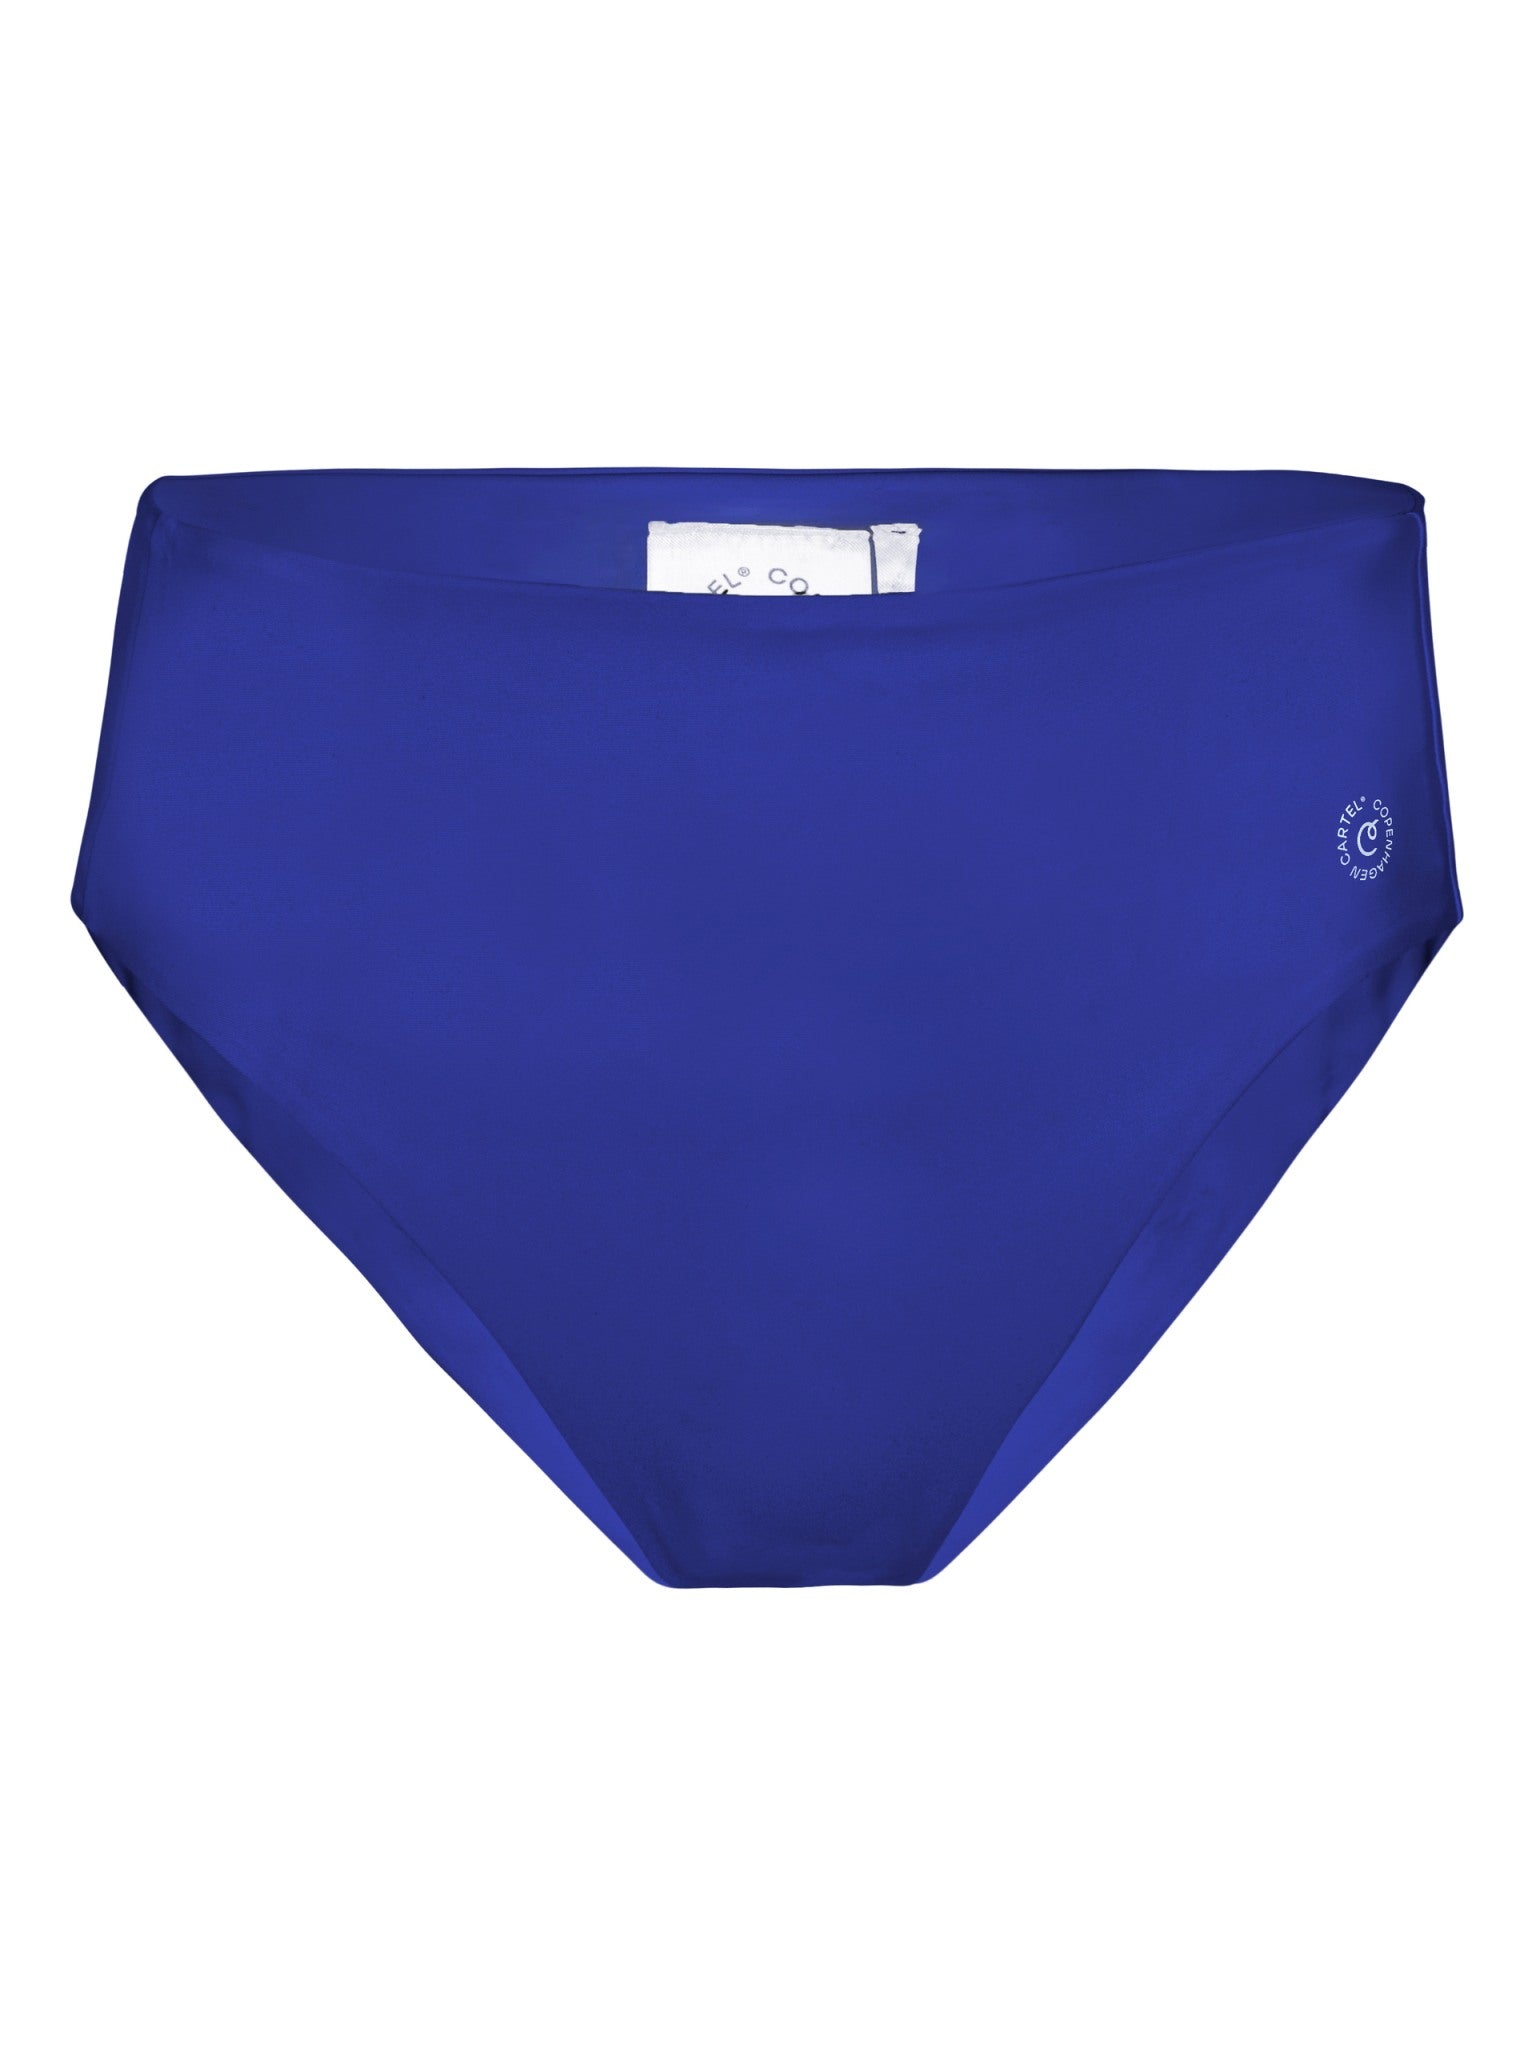 Ubud high-waist bikini bottom - Cartel Blue